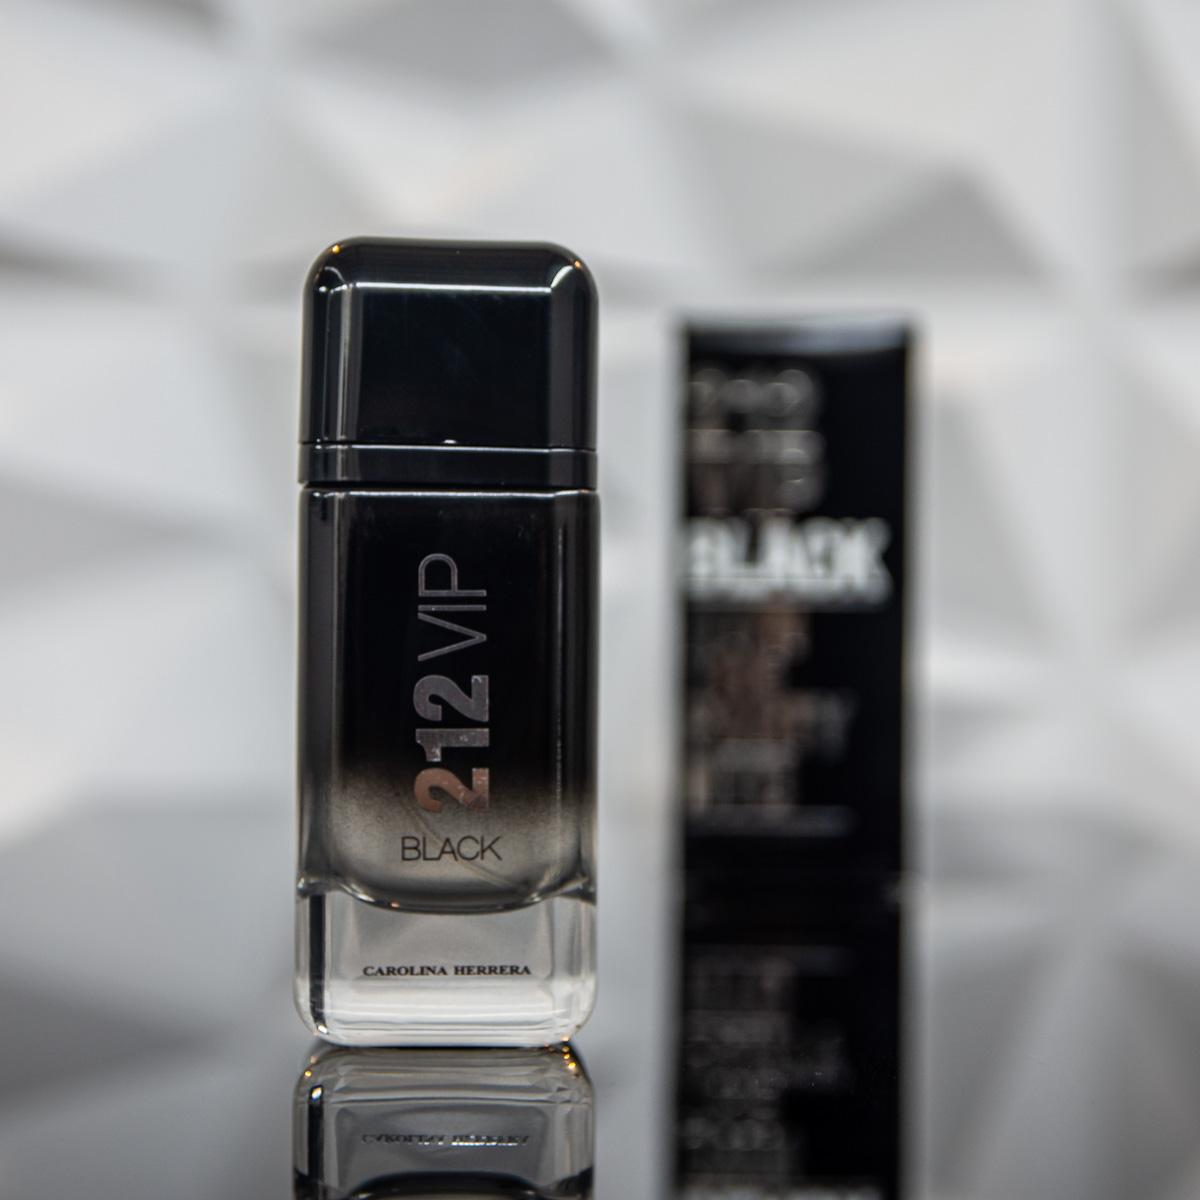 Perfume Carolina Herrera 212 VIP Black Para Hombre (Replica Con Fragancia Importada)